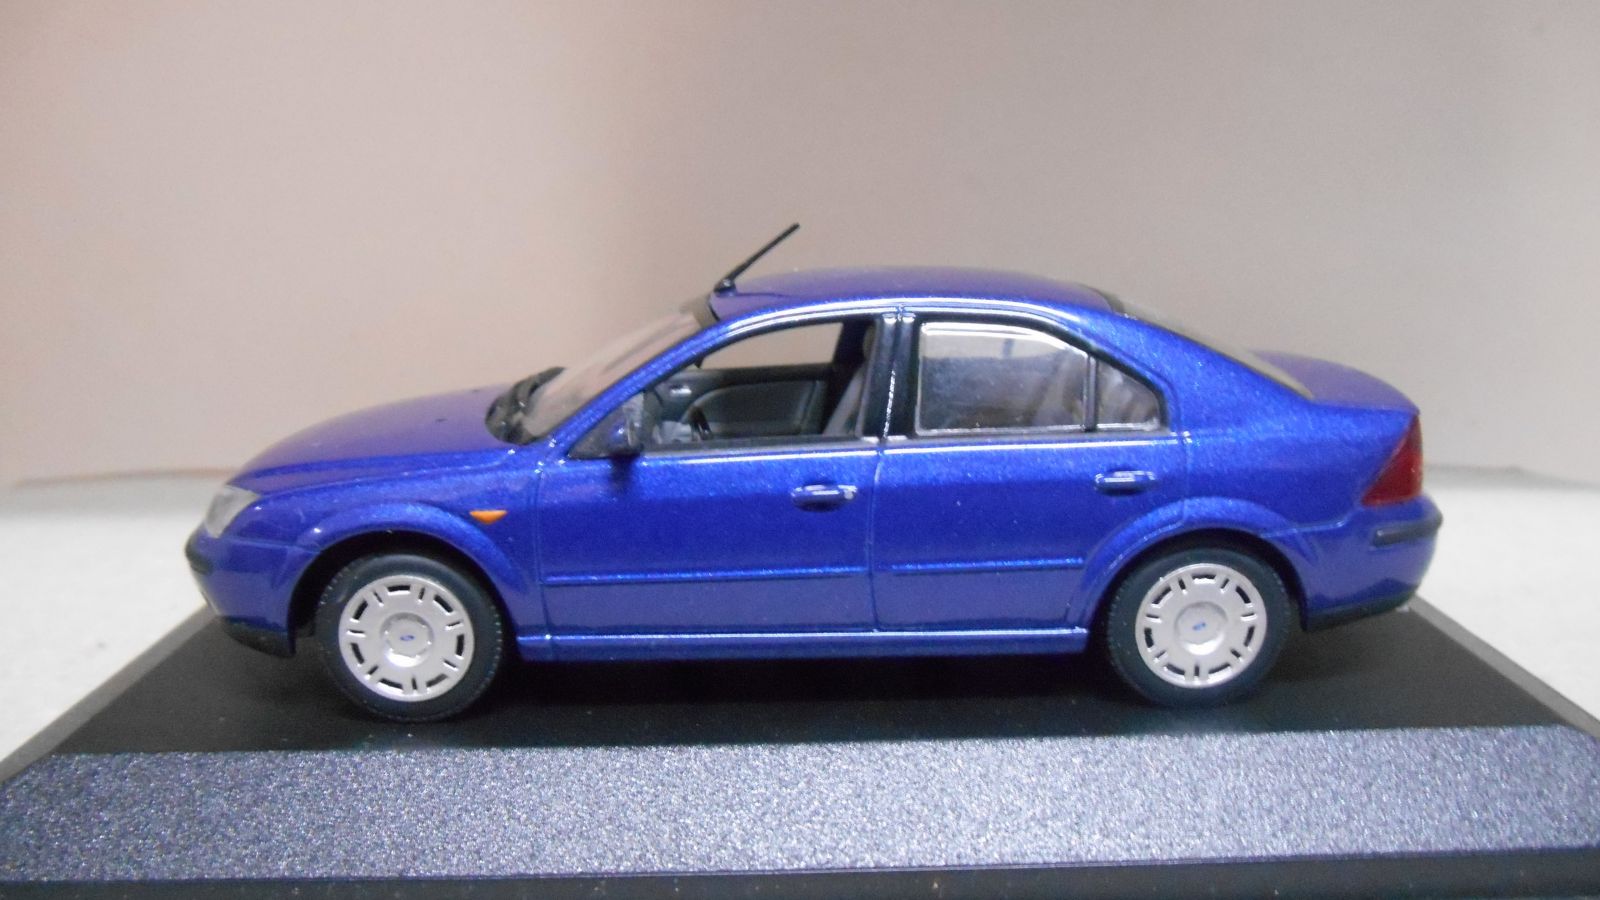 FORD MONDEO MK3 MODEL CAR BLUE 1:43 SCALE MINICHAMPS 4 DOOR 2000 K8 